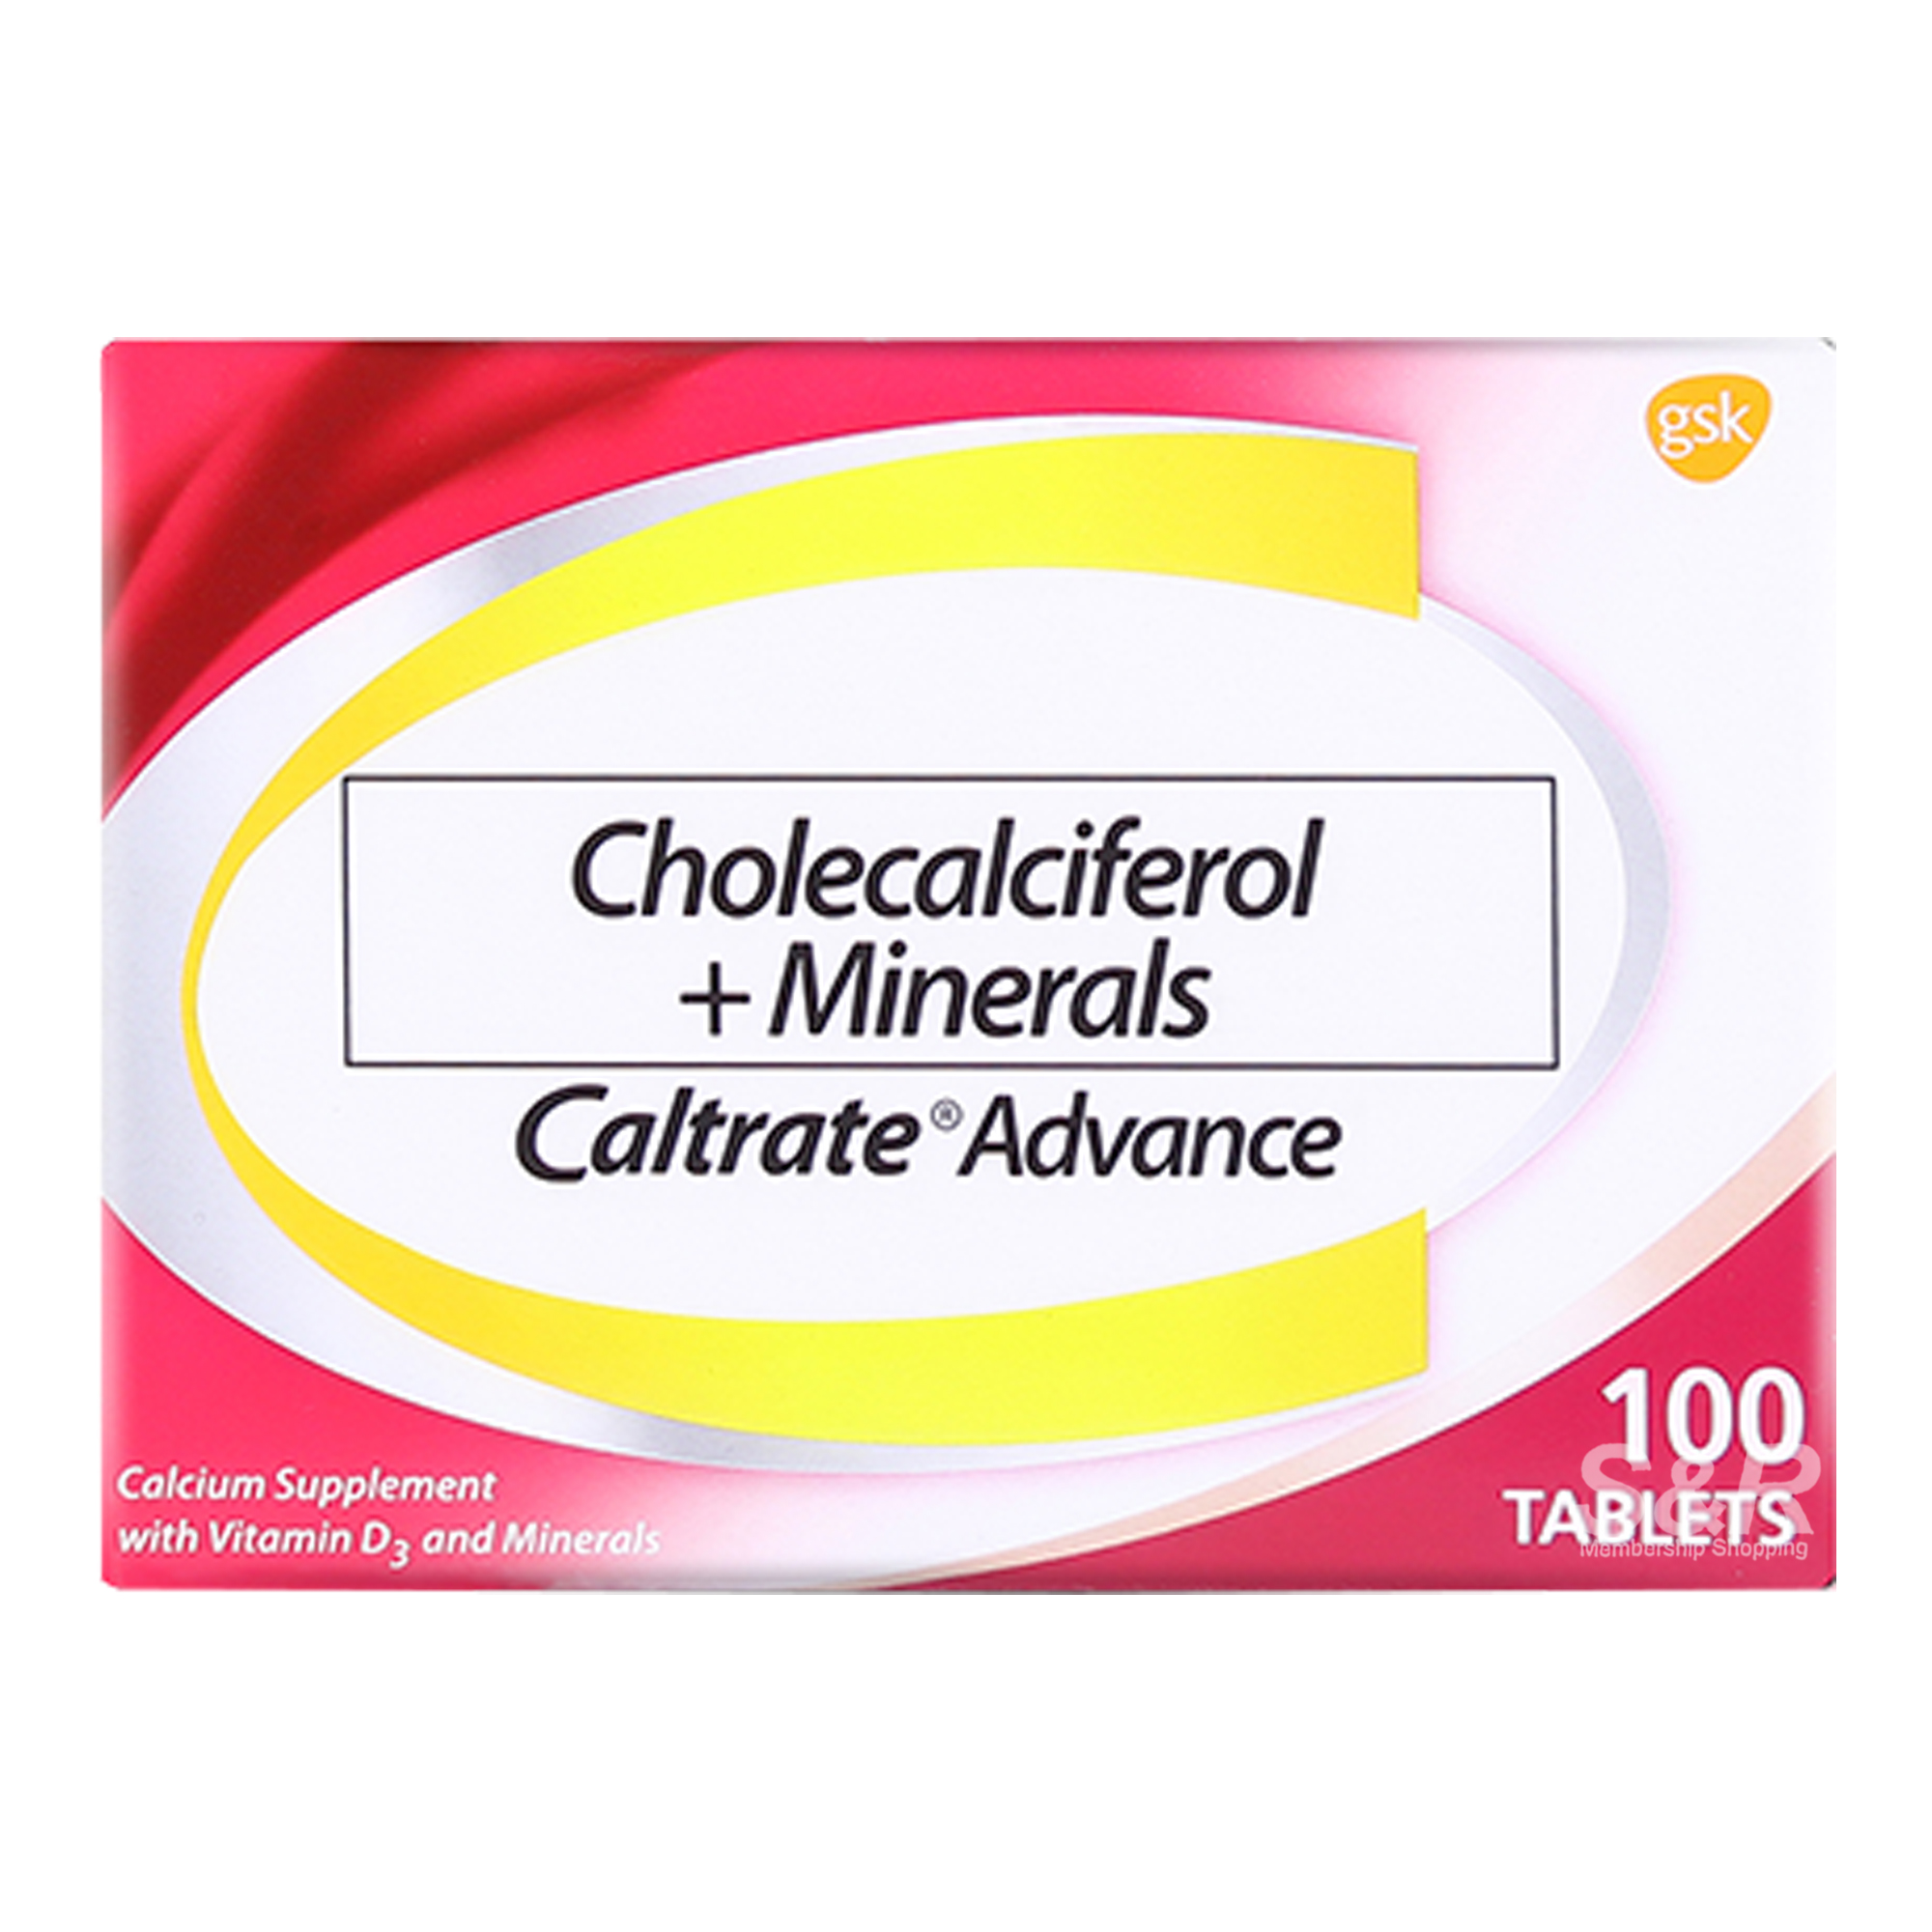 Caltrate Advance Cholecalciferol + Minerals 100 Tablets